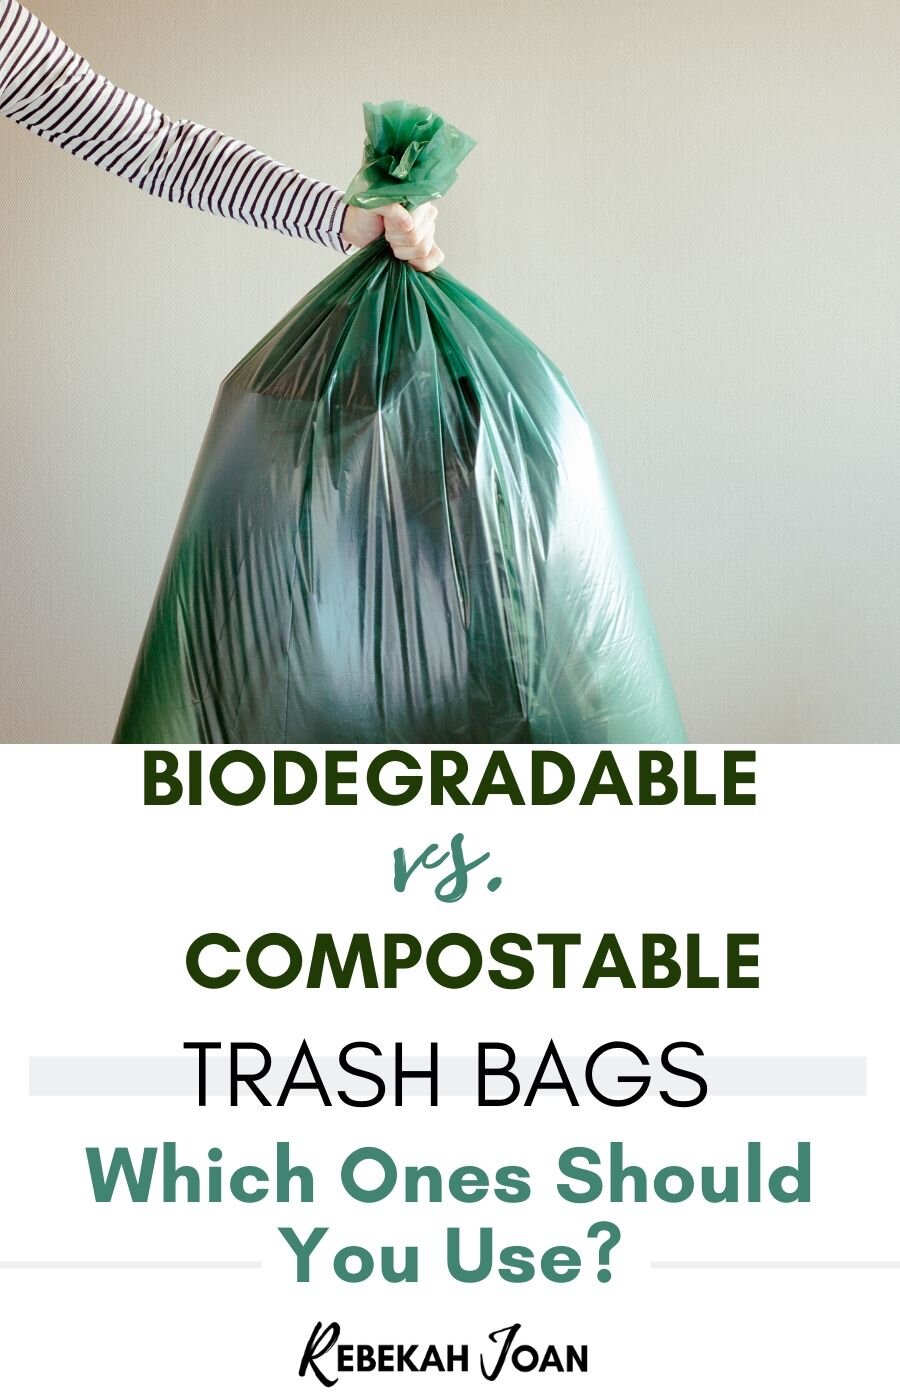 Slink Oppressor Groping Compostable vs. Biodegradable Trash Bags: Which Ones to Buy? — Rebekah Joan